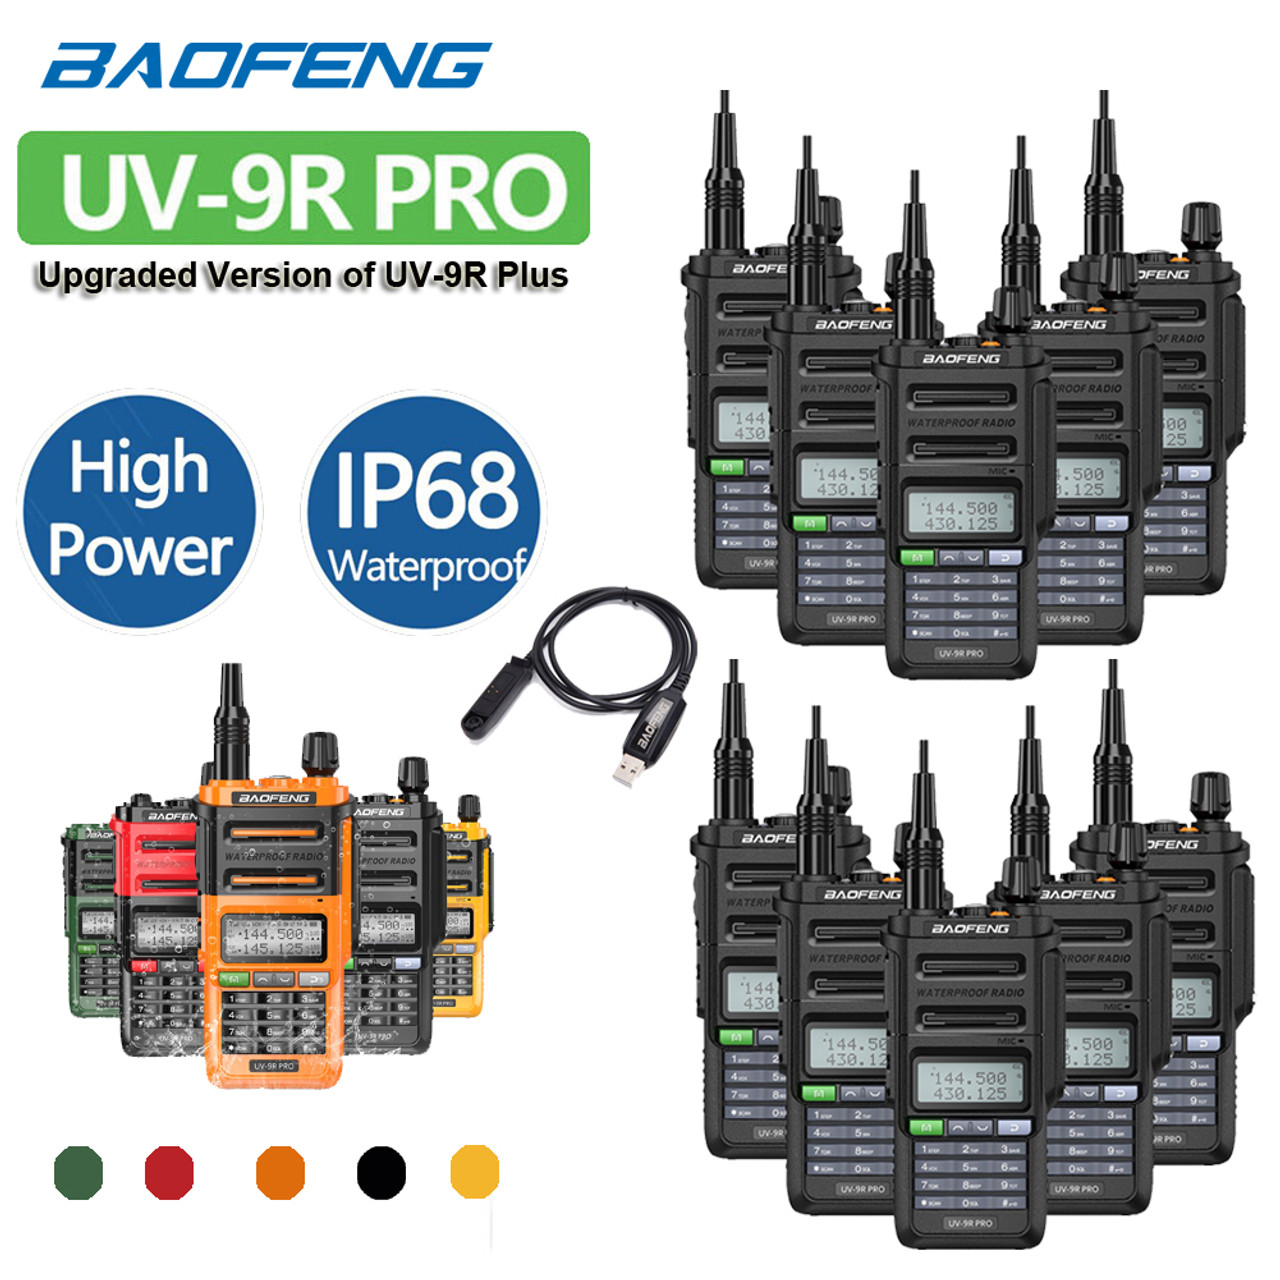 10 x UV-9R PRO IP68 Waterproof UHF/VHF Walkie Talkies Long Range Two Way Programming  Cable BaoFeng Radio UK